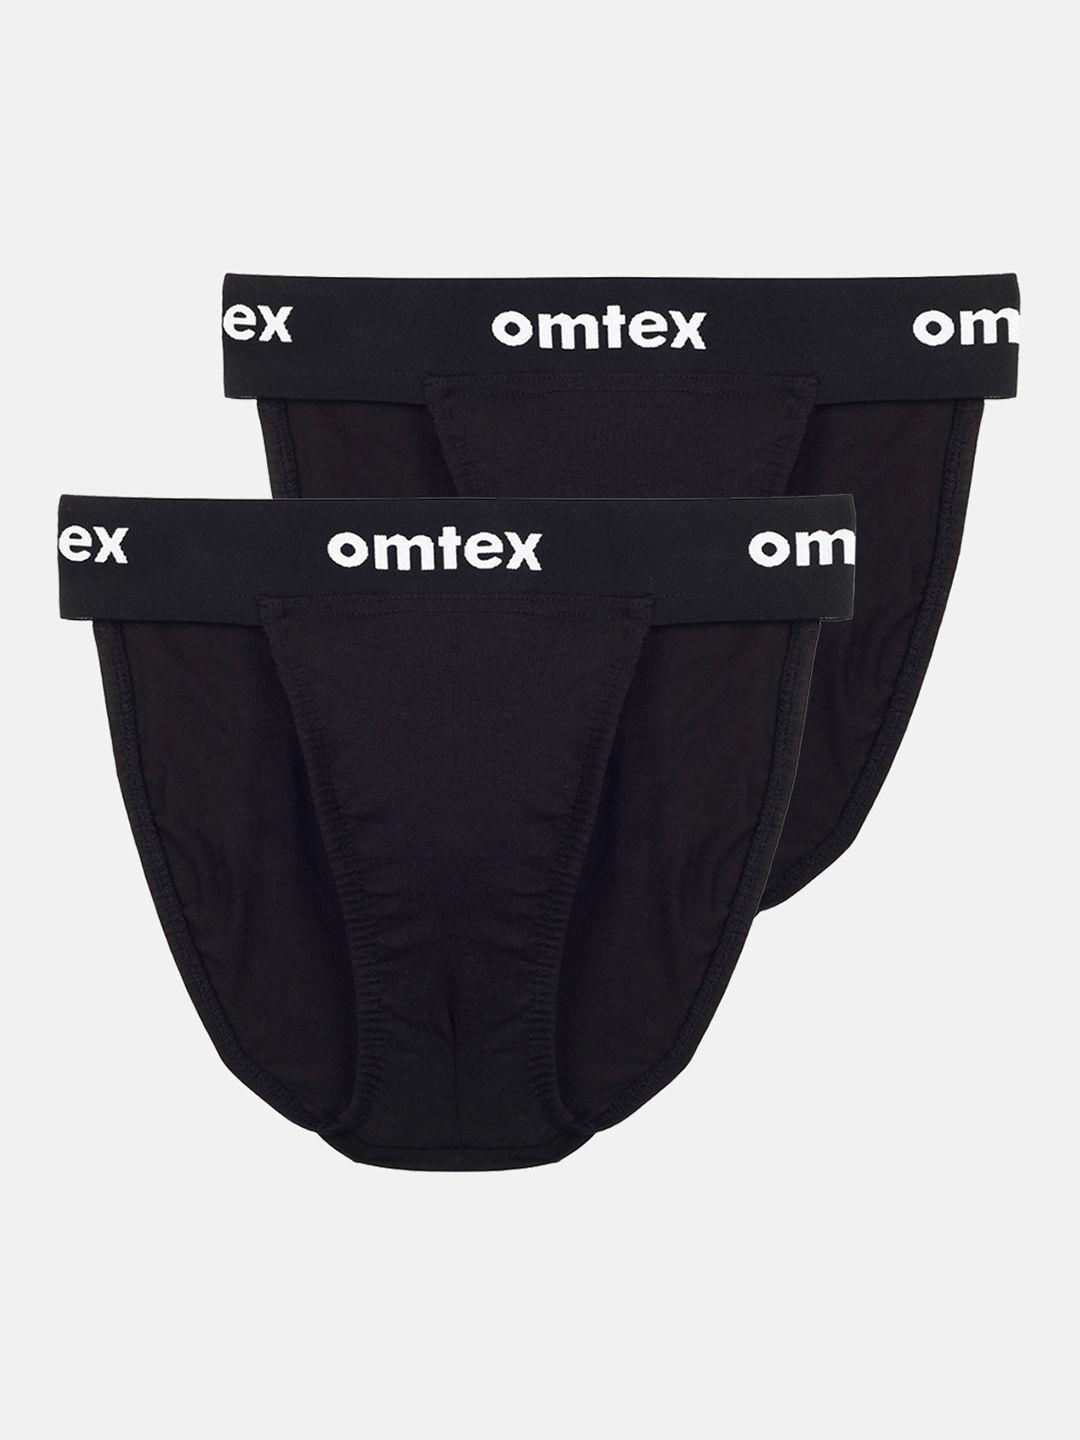 omtex men pack of 2 black solid briefs